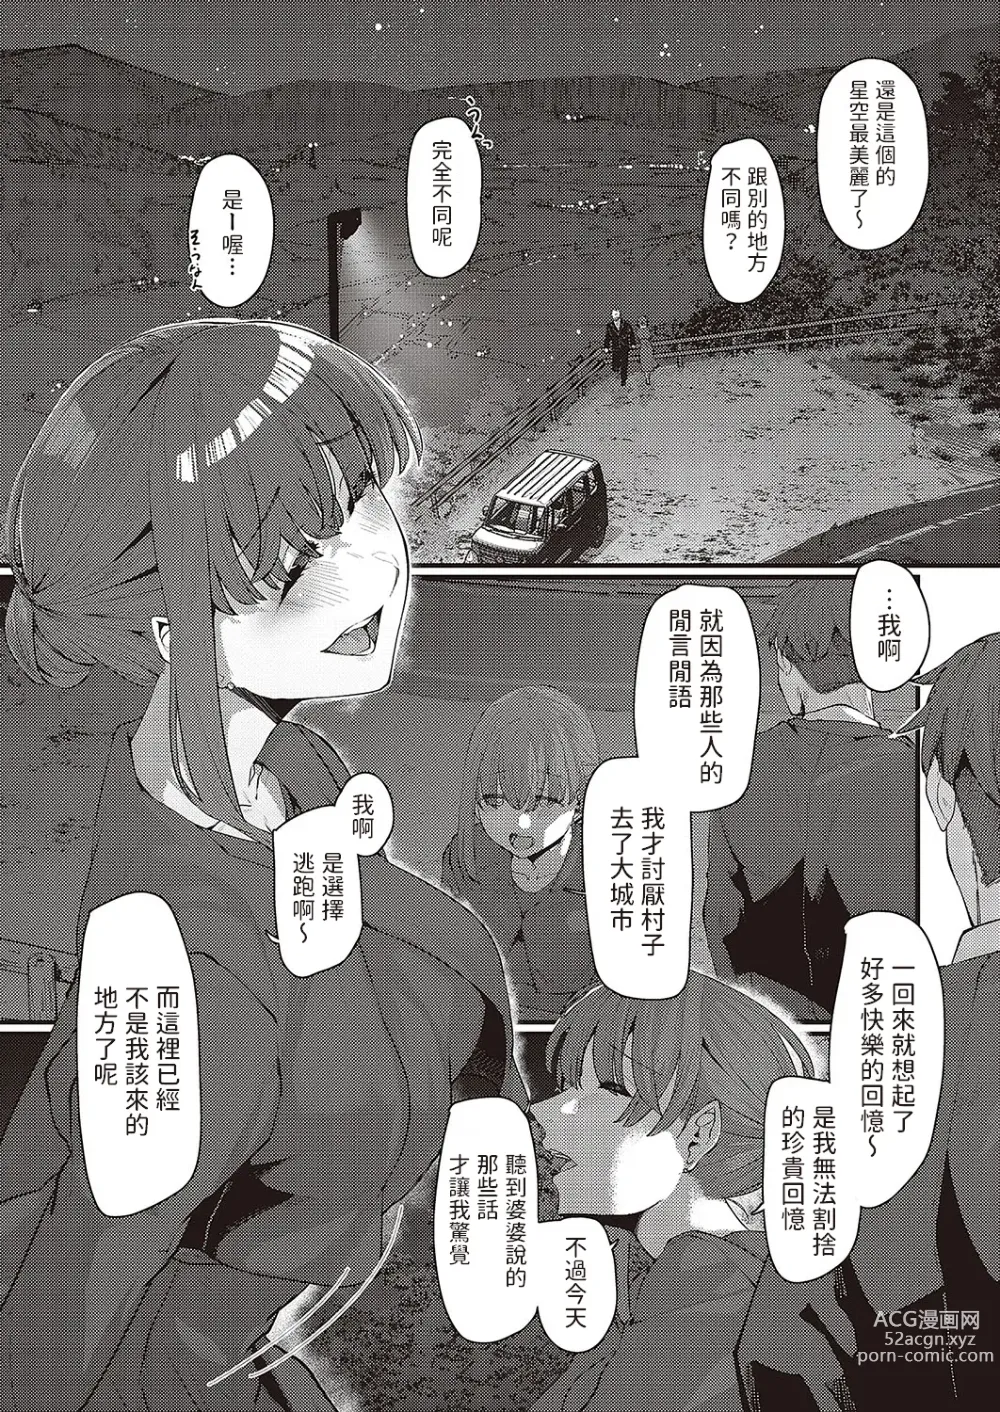 Page 7 of manga Furusato